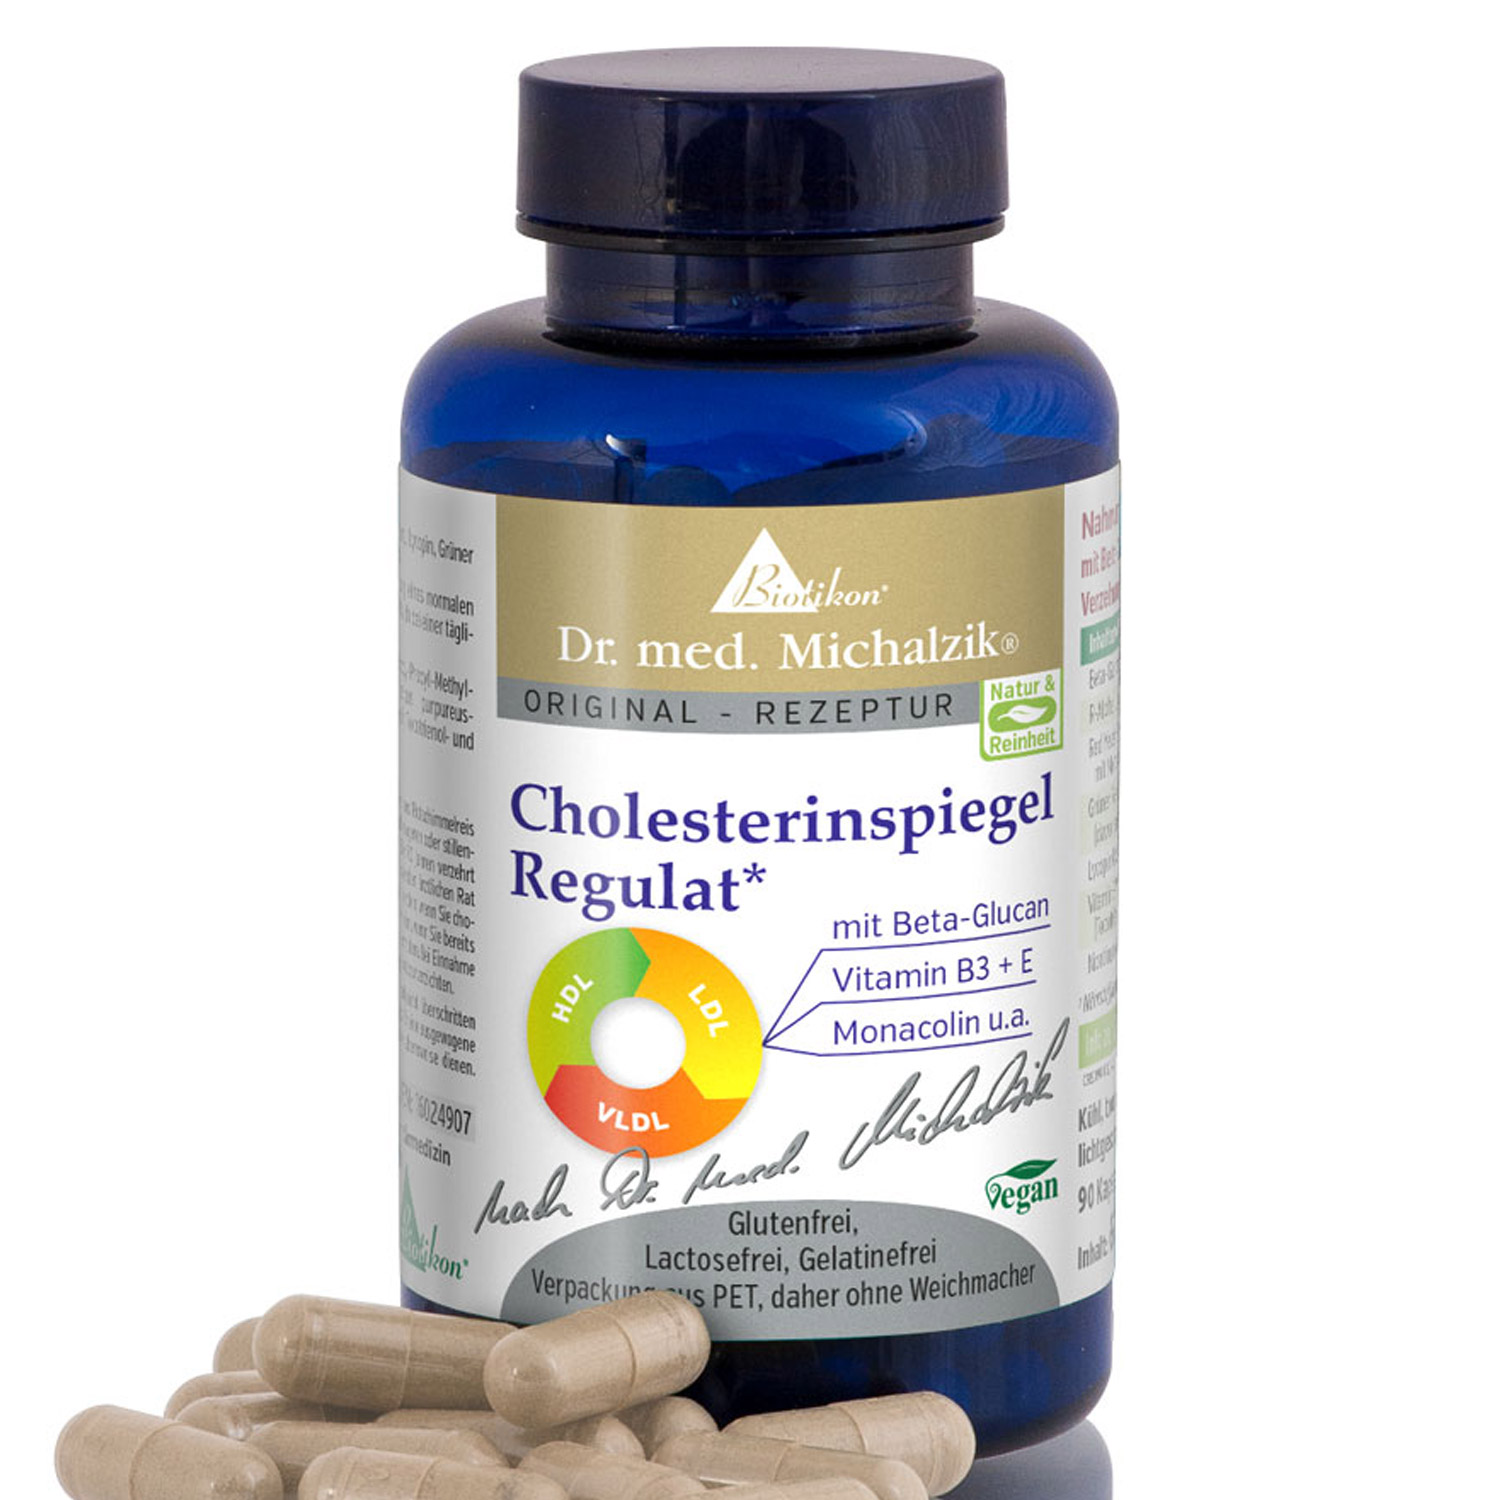 Cholesterinspiegel Regulat von Biotikon - 90 Kapseln